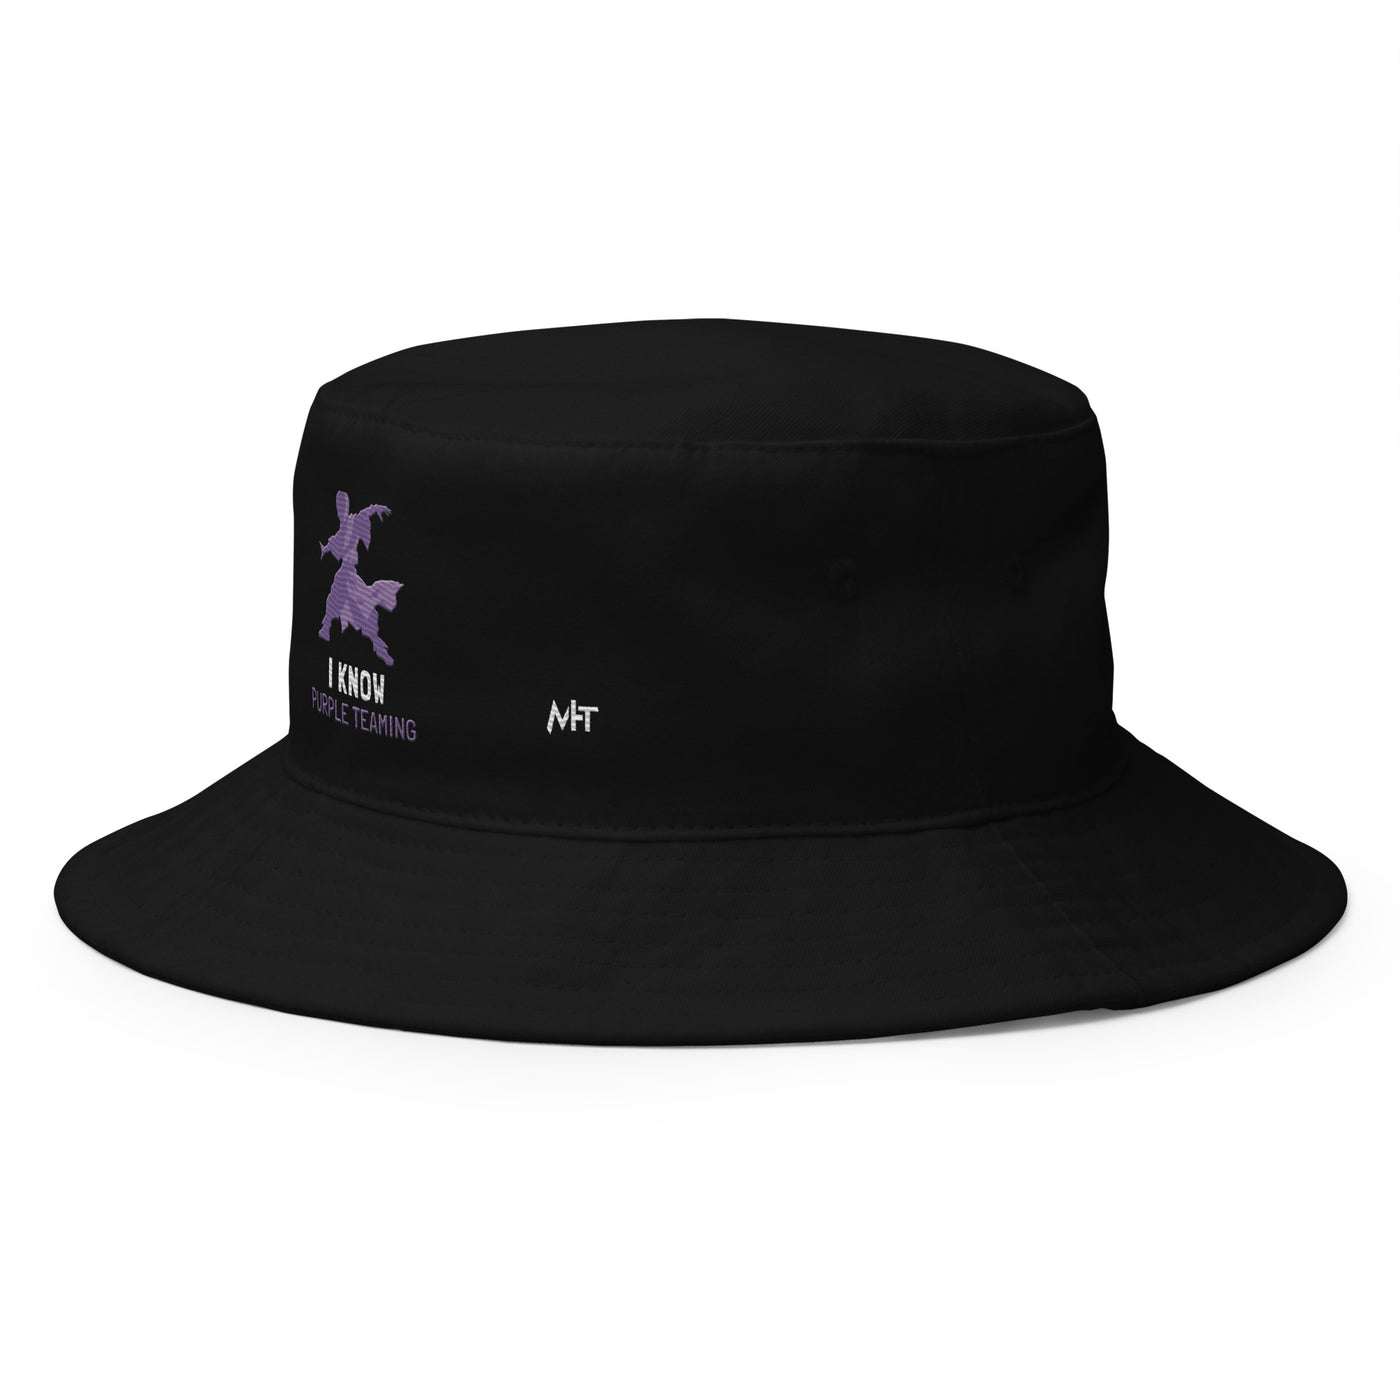 I Know Purple Teaming - Bucket Hat